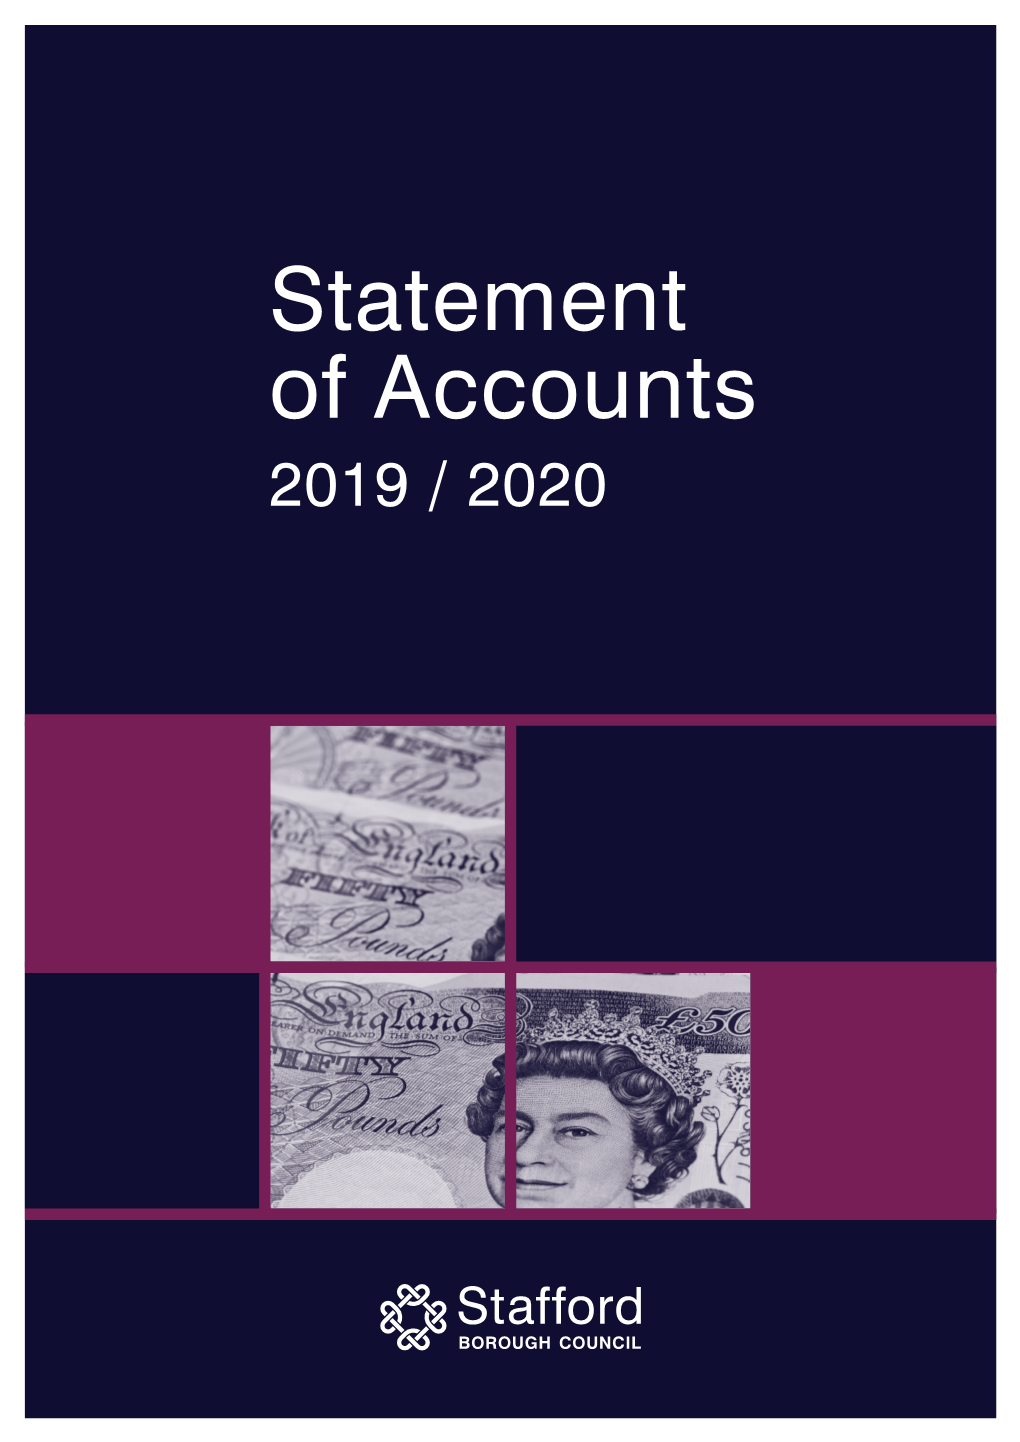 Statement of Accounts 2019-2020